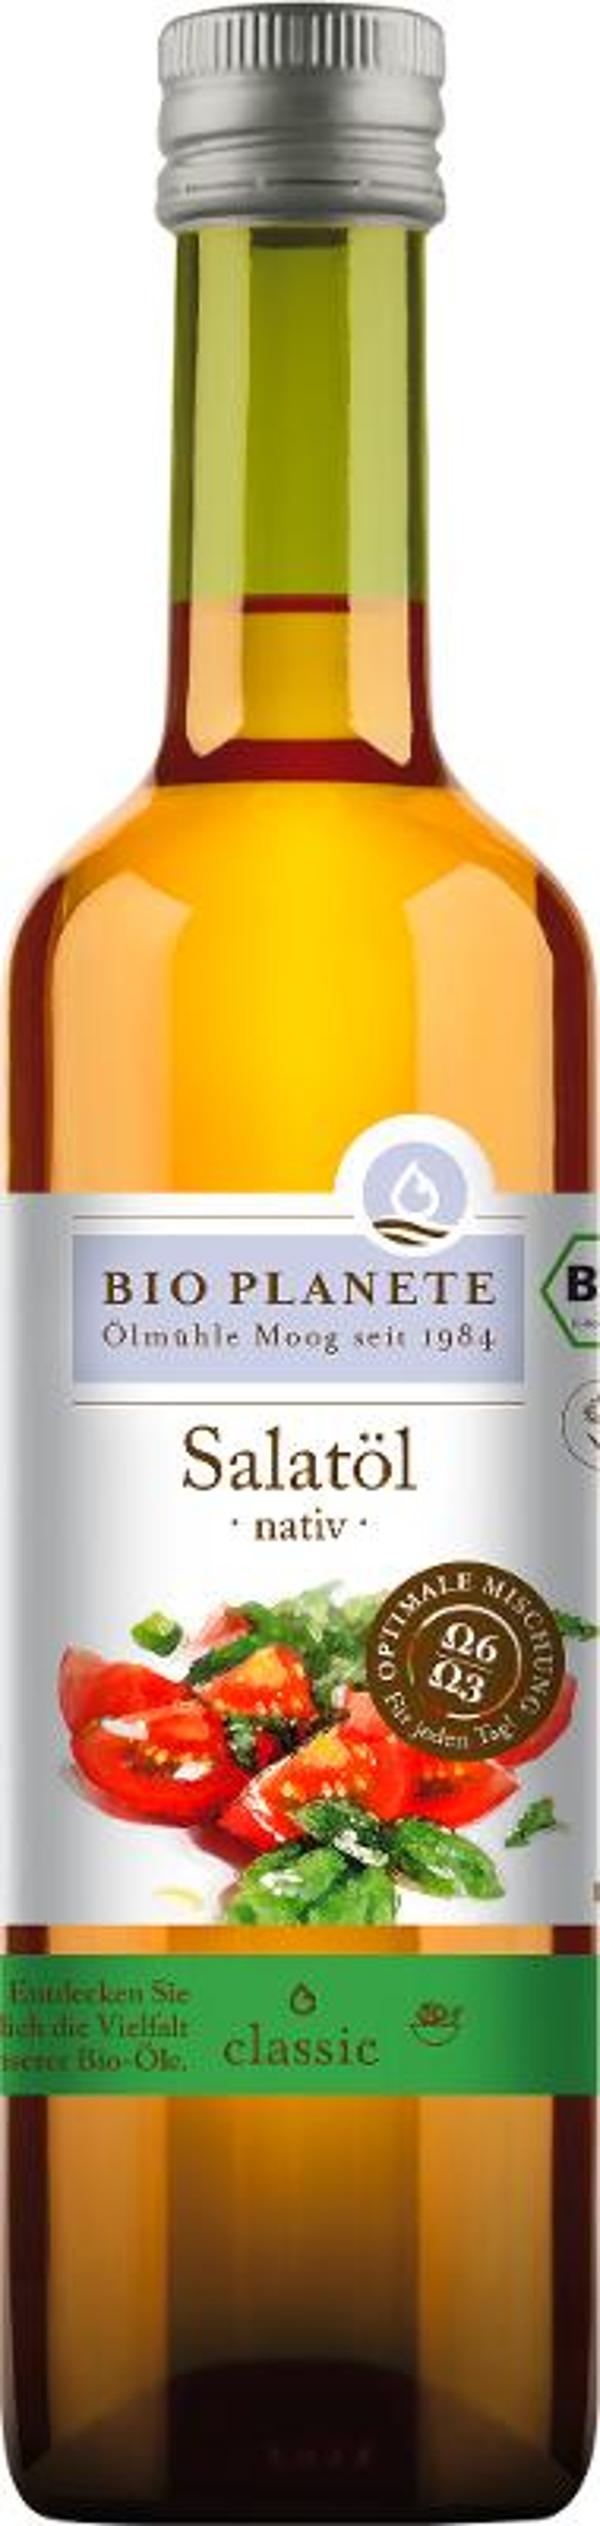 Produktfoto zu Salatöl nativ 0,5 l  Bio Planète